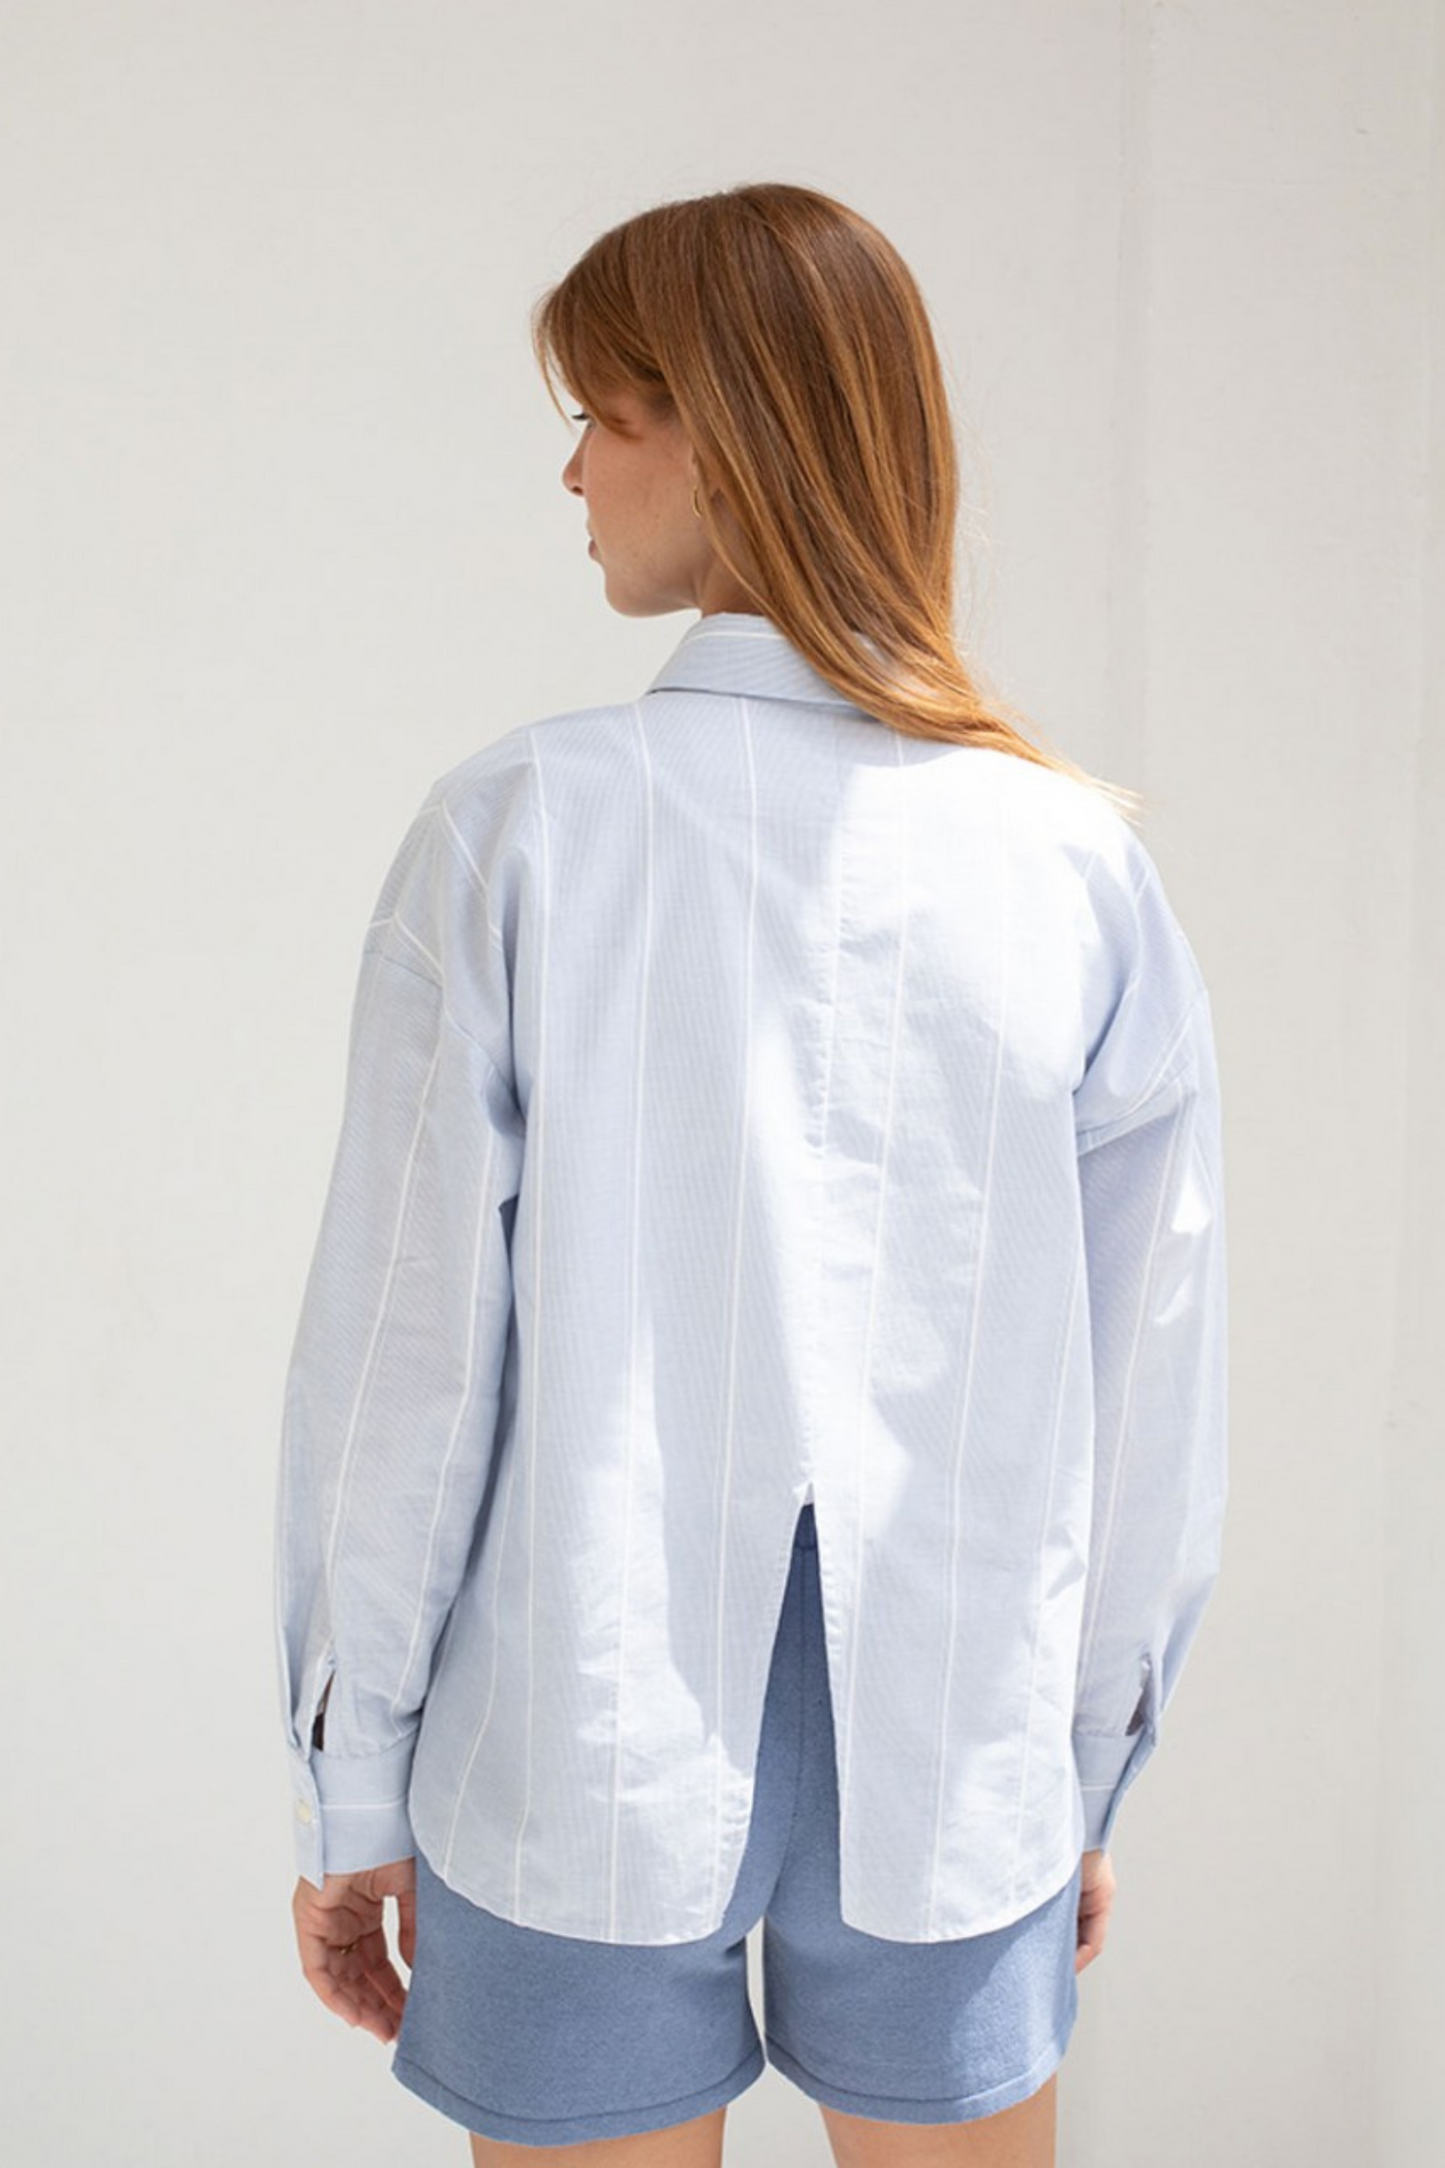 Challi - Blue and White Cotton Shirt